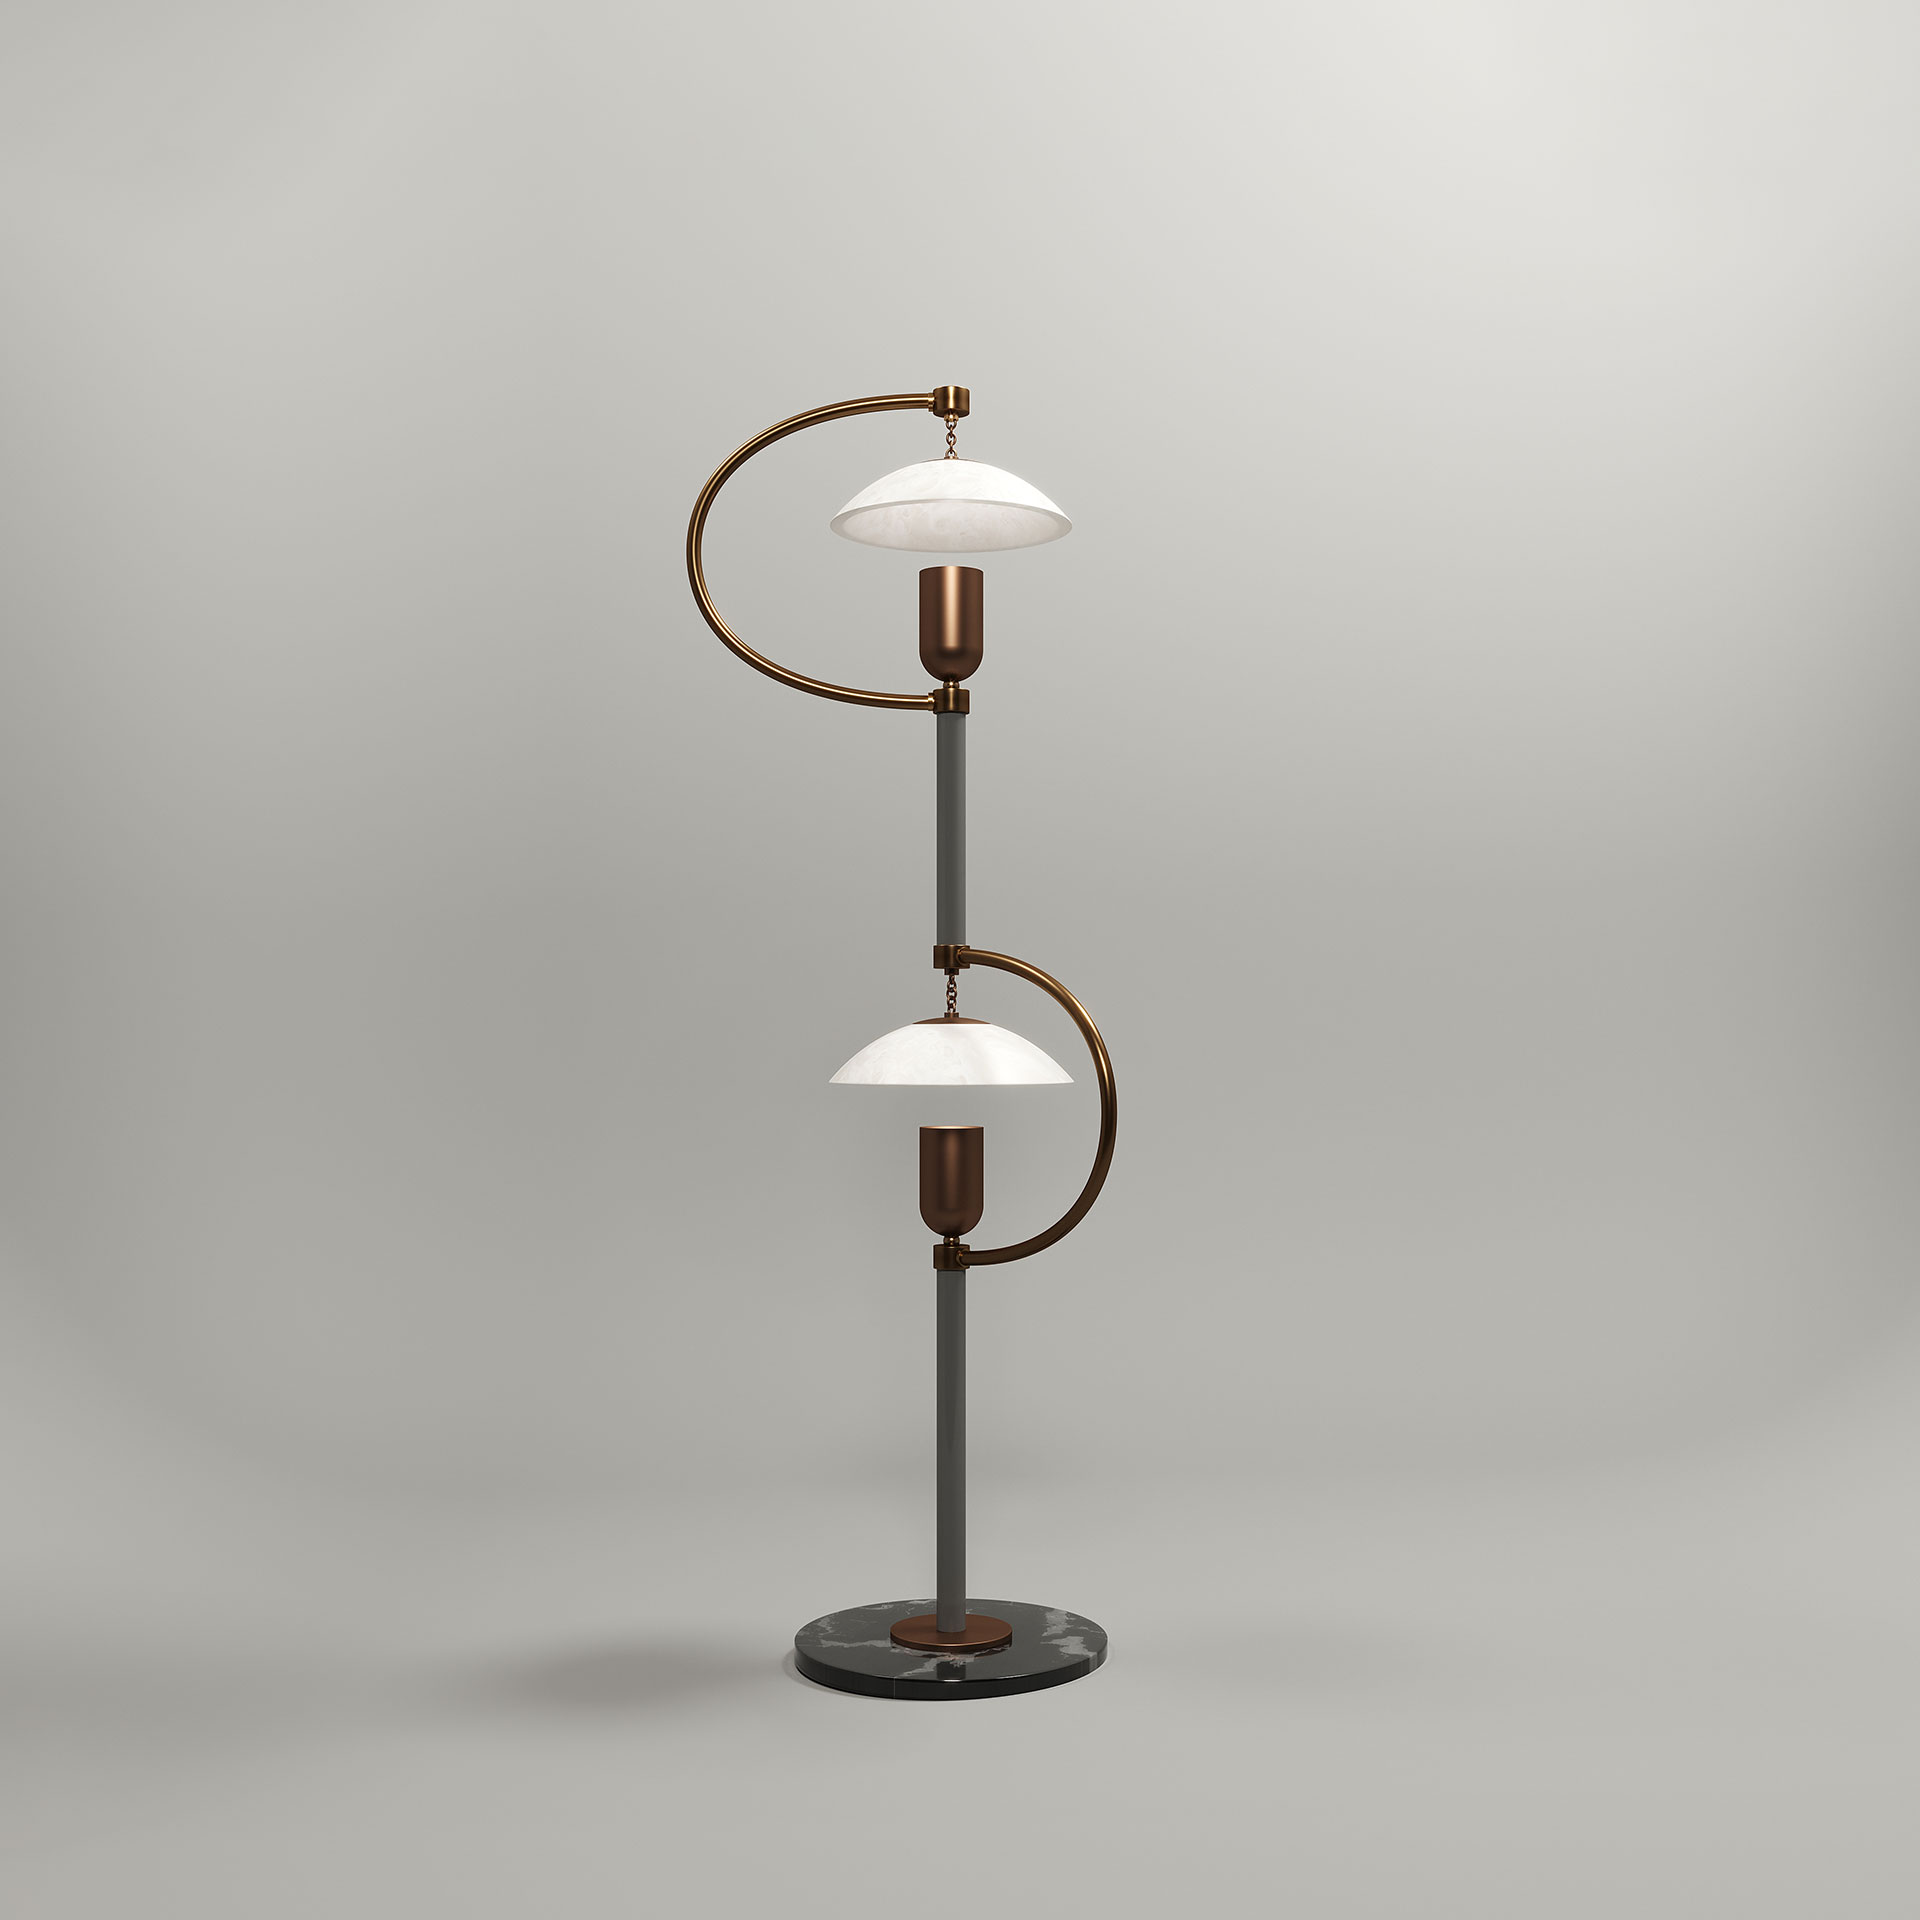 Sofo floor lamp by creativemary | luxury lighting